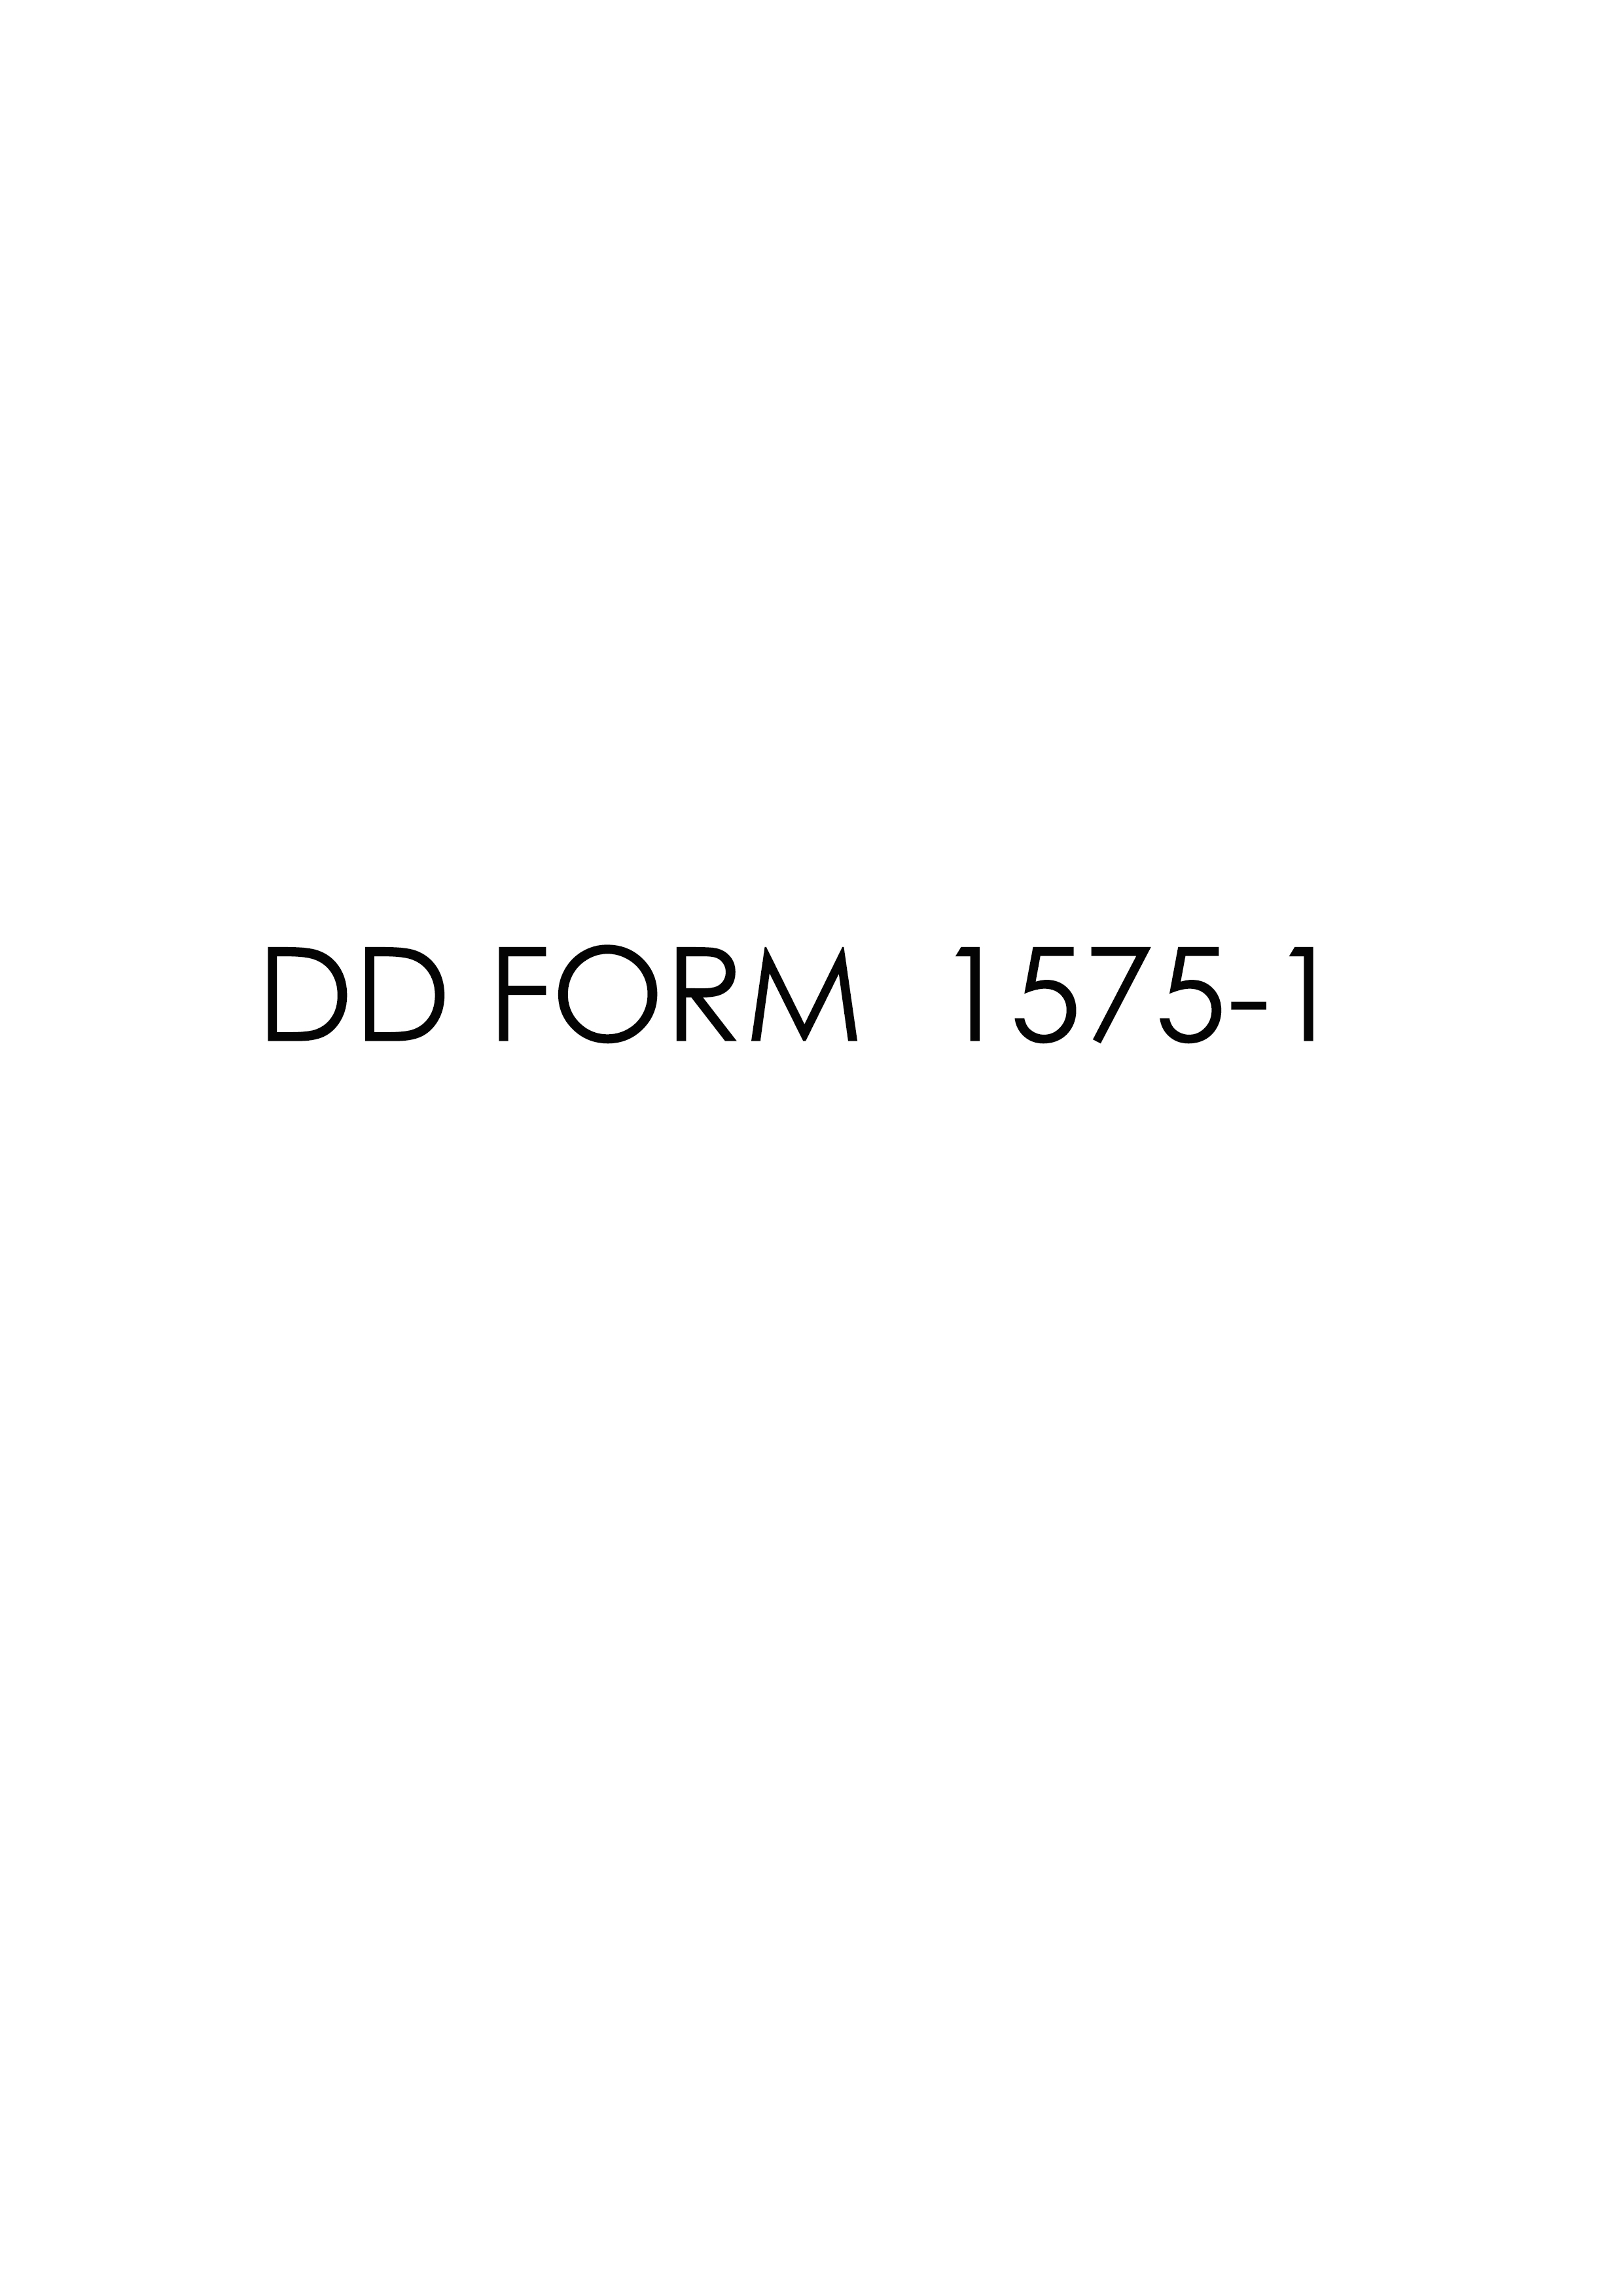 Download dd form 1575-1